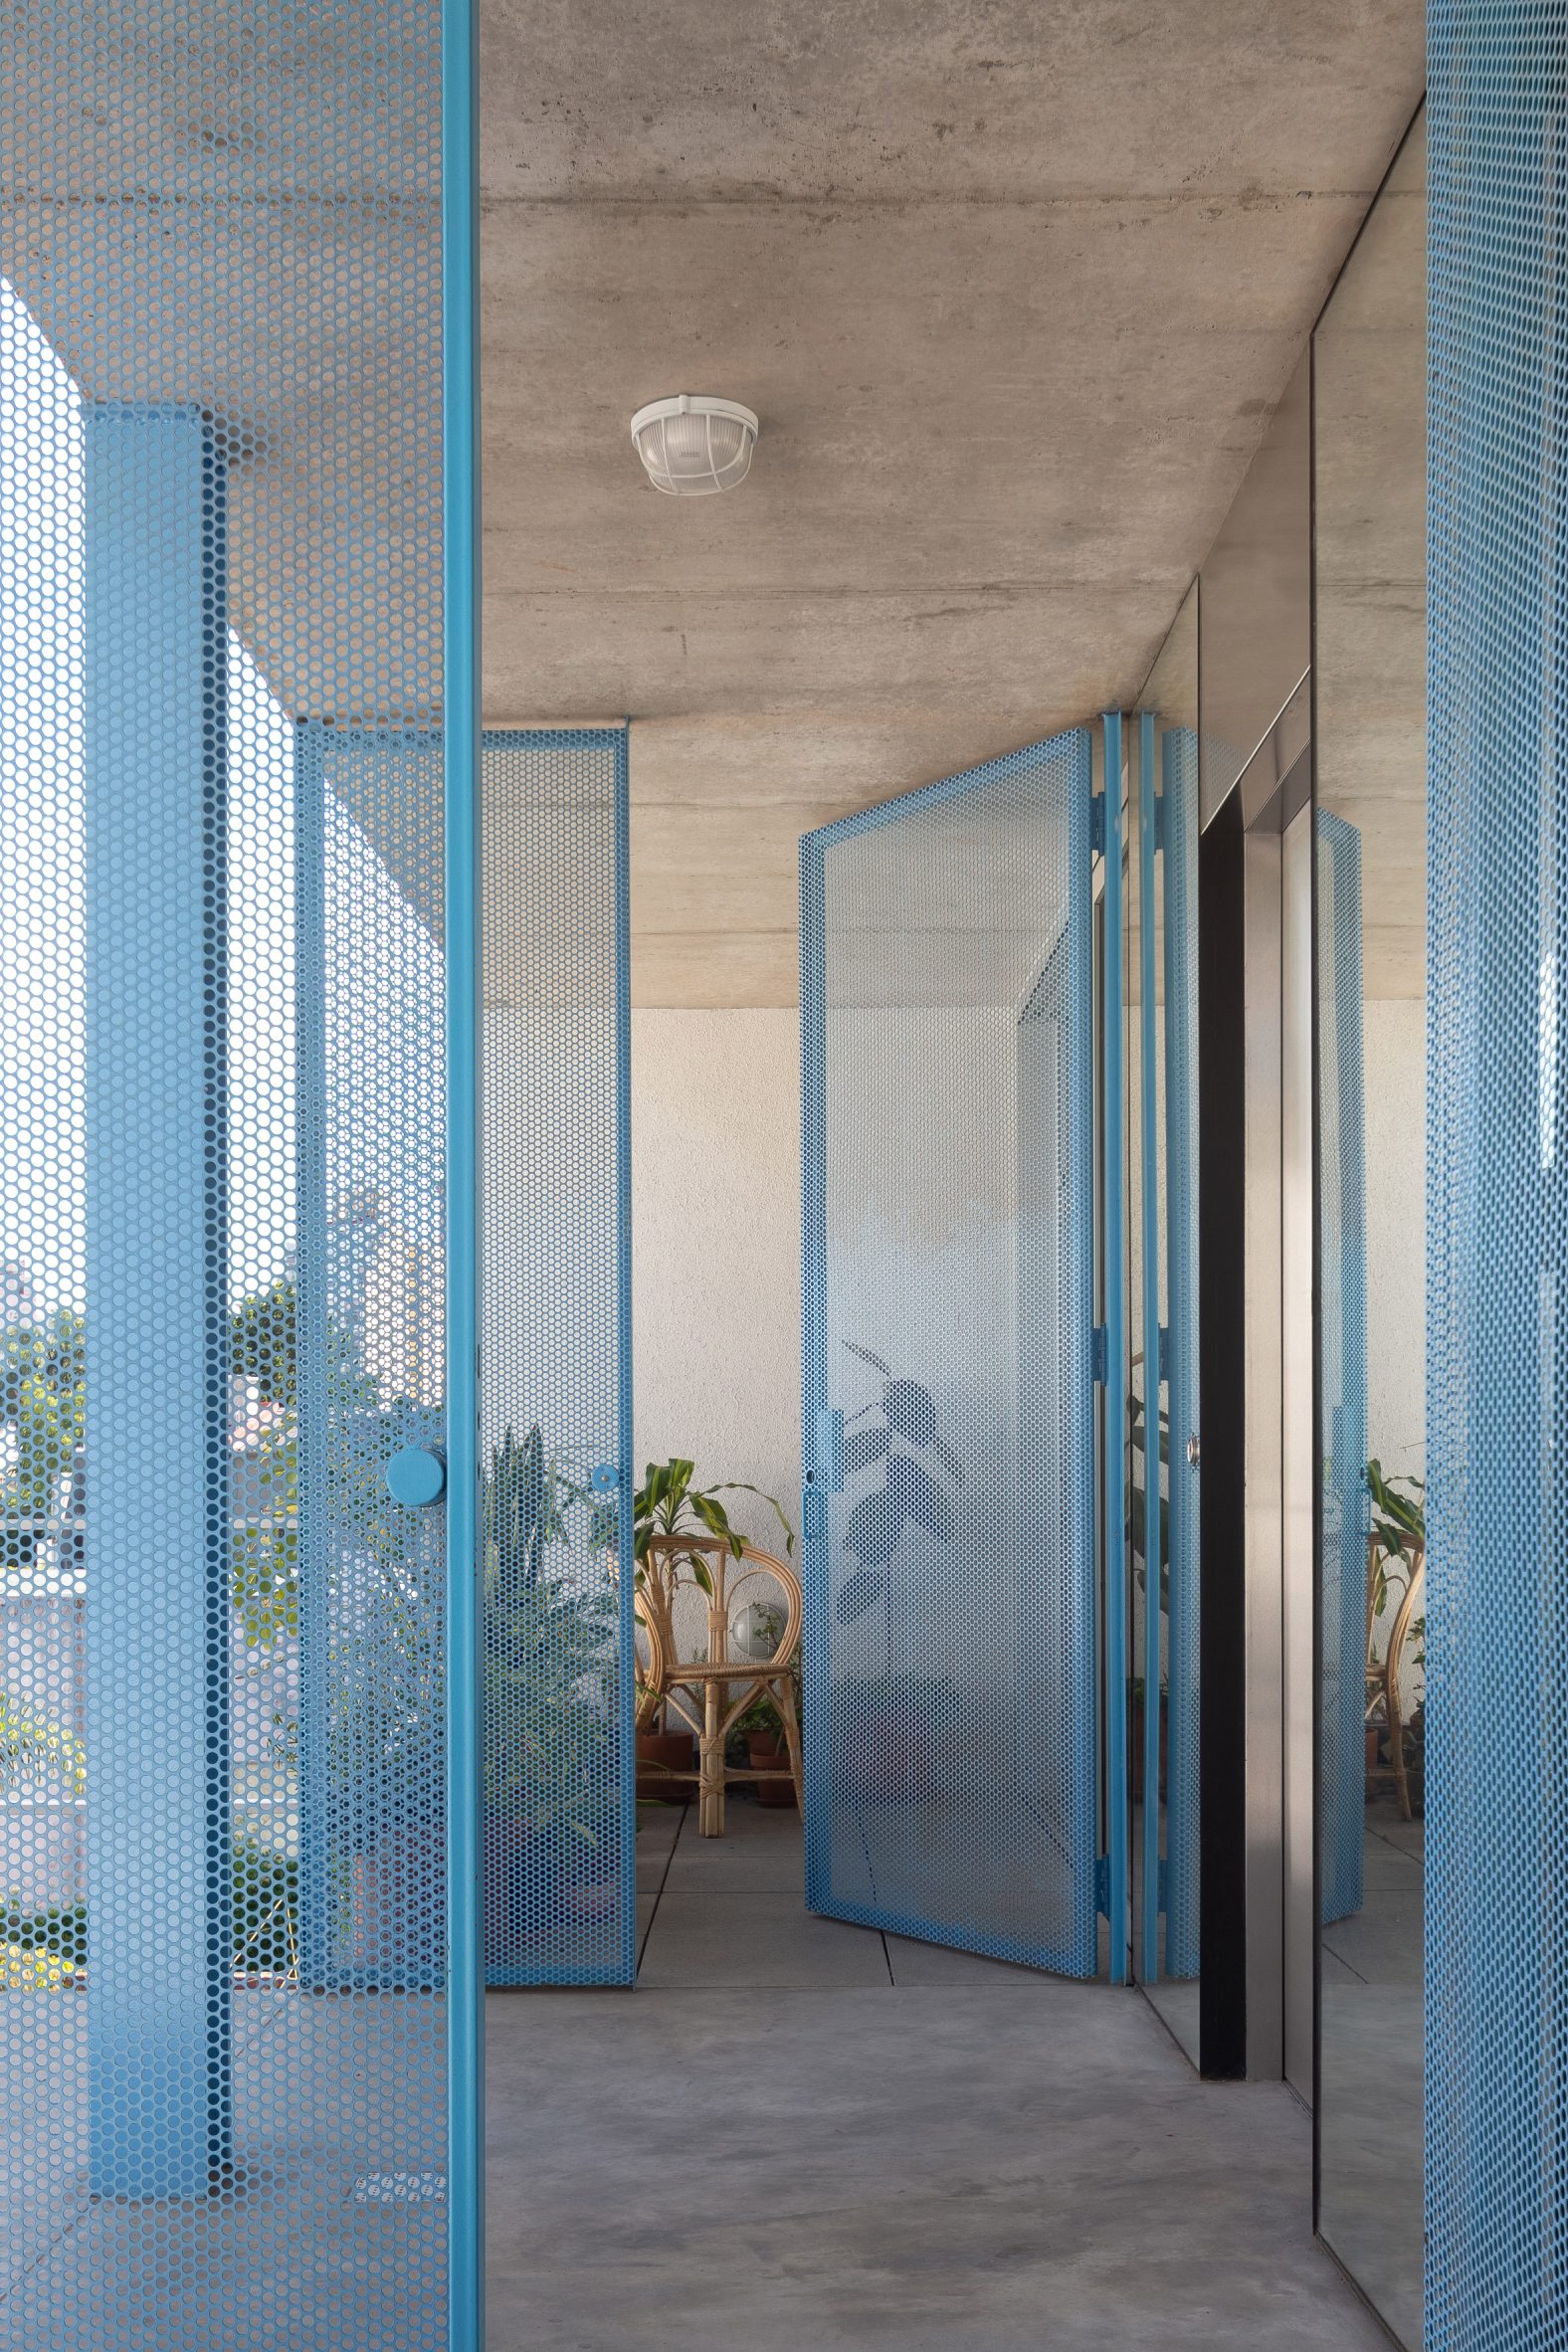 Concrete apartment building with blue mesh metal doors